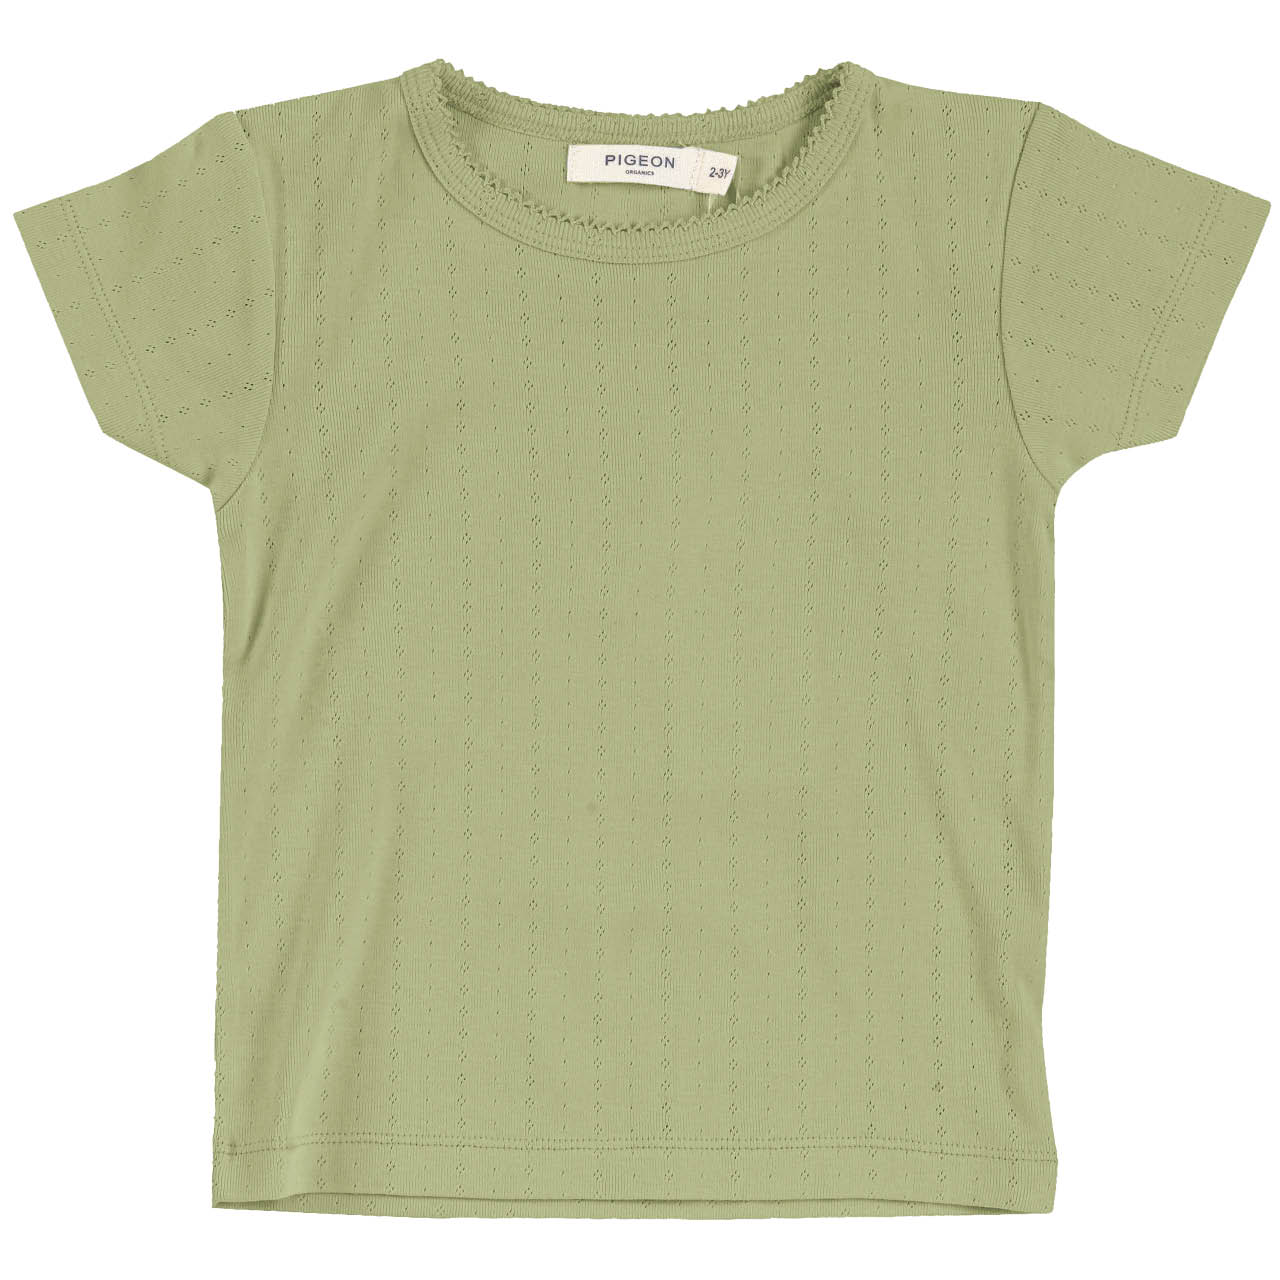 Pointelle Mädchen Shirt kurzarm grün